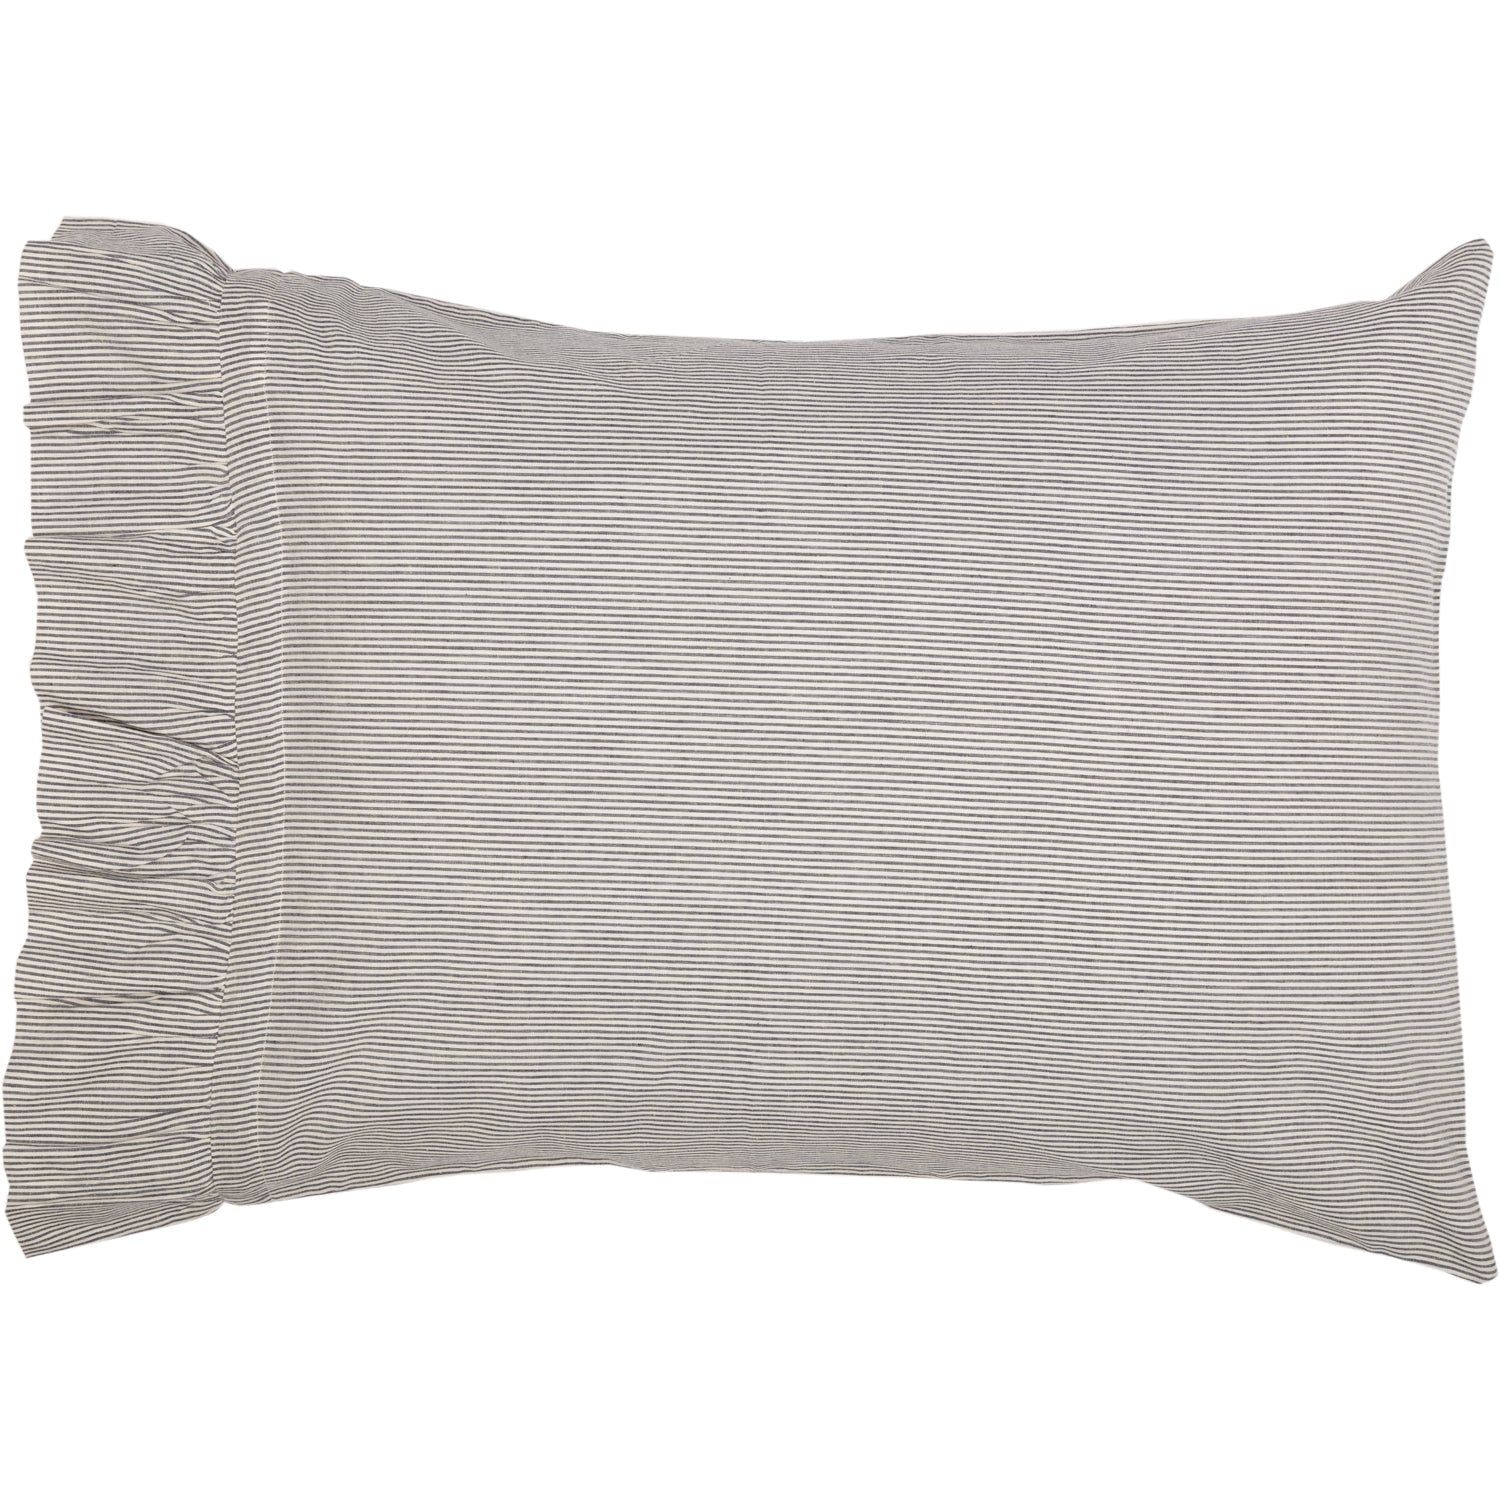 Dakota Star Farmhouse Blue Ticking Stripe Standard Pillow Case Set of 2 21x30 VHC Brands